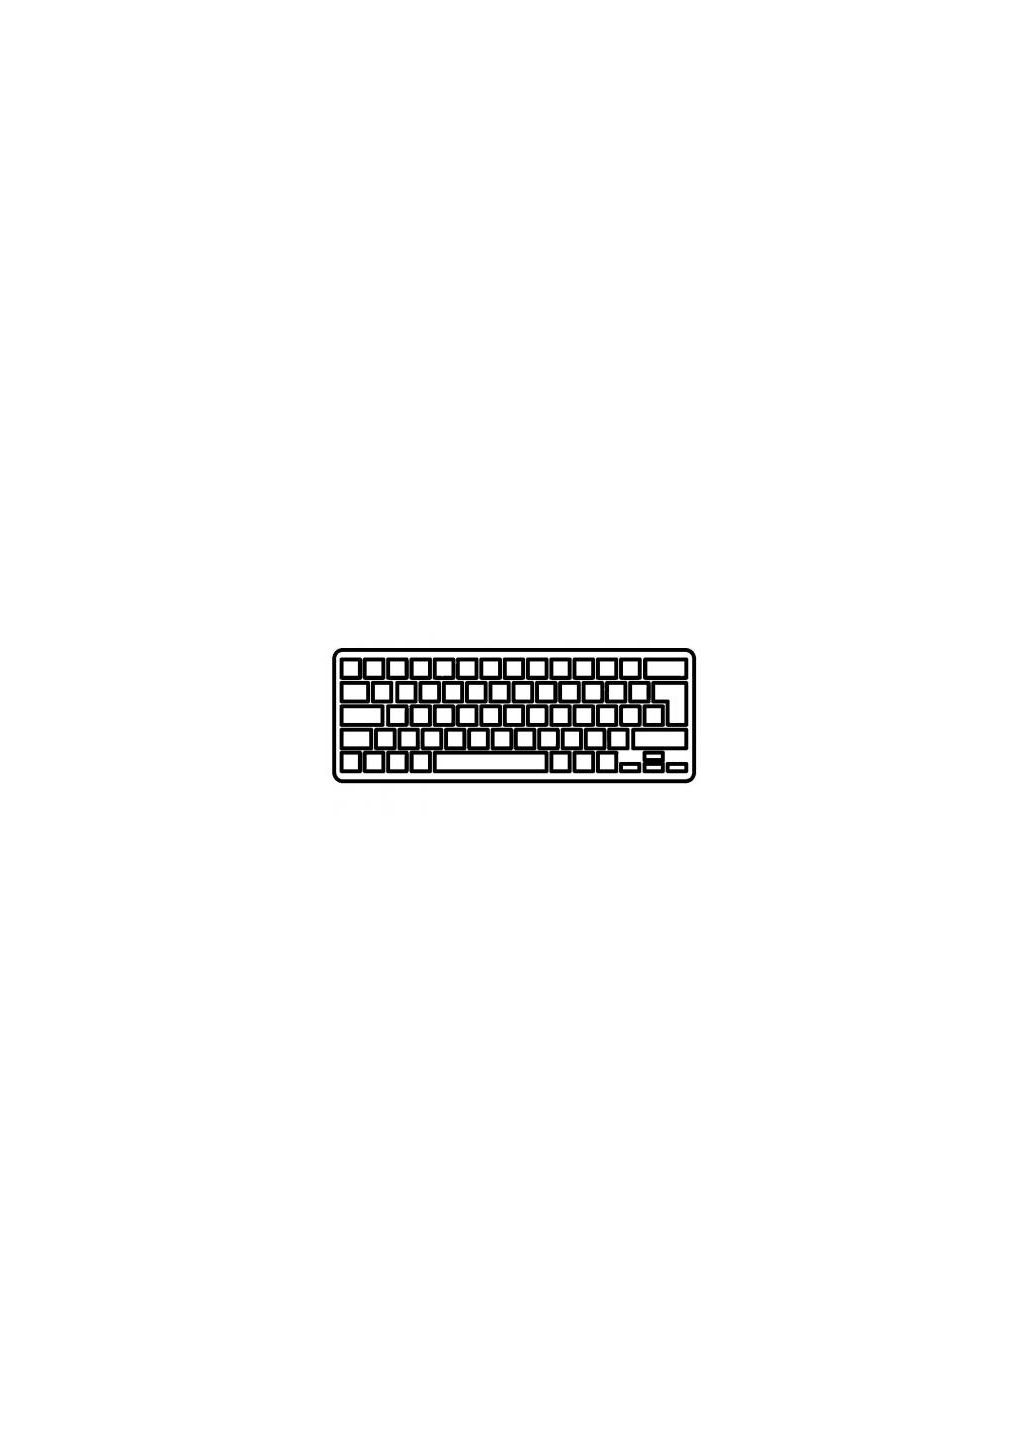 Клавиатура ноутбука (A43453) Acer travelmate 4750 series черная ua (276707554)